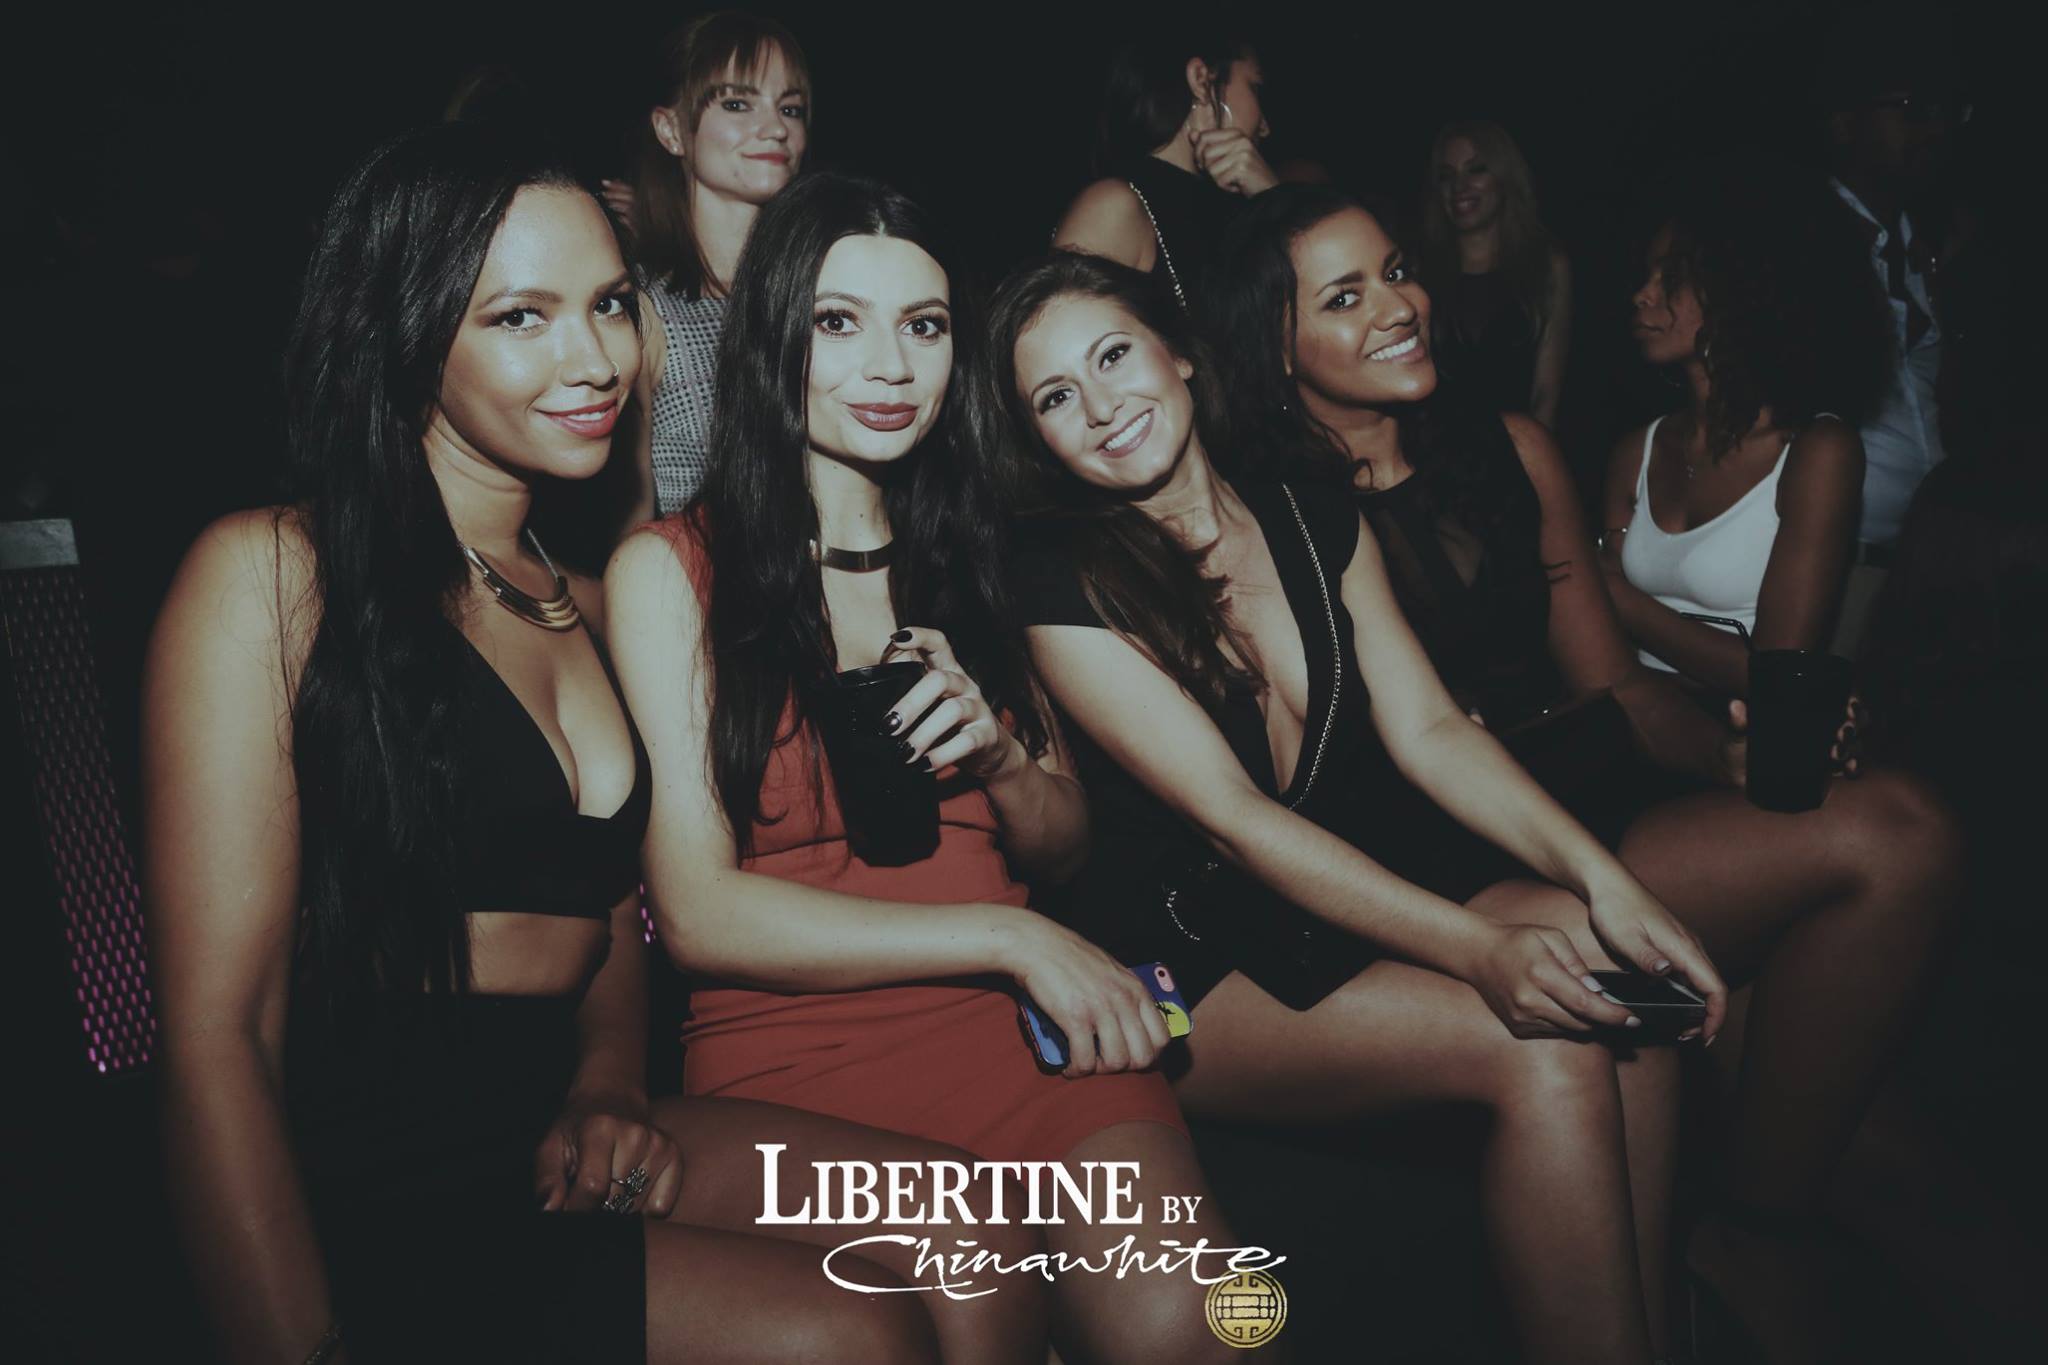 Libertine club party image